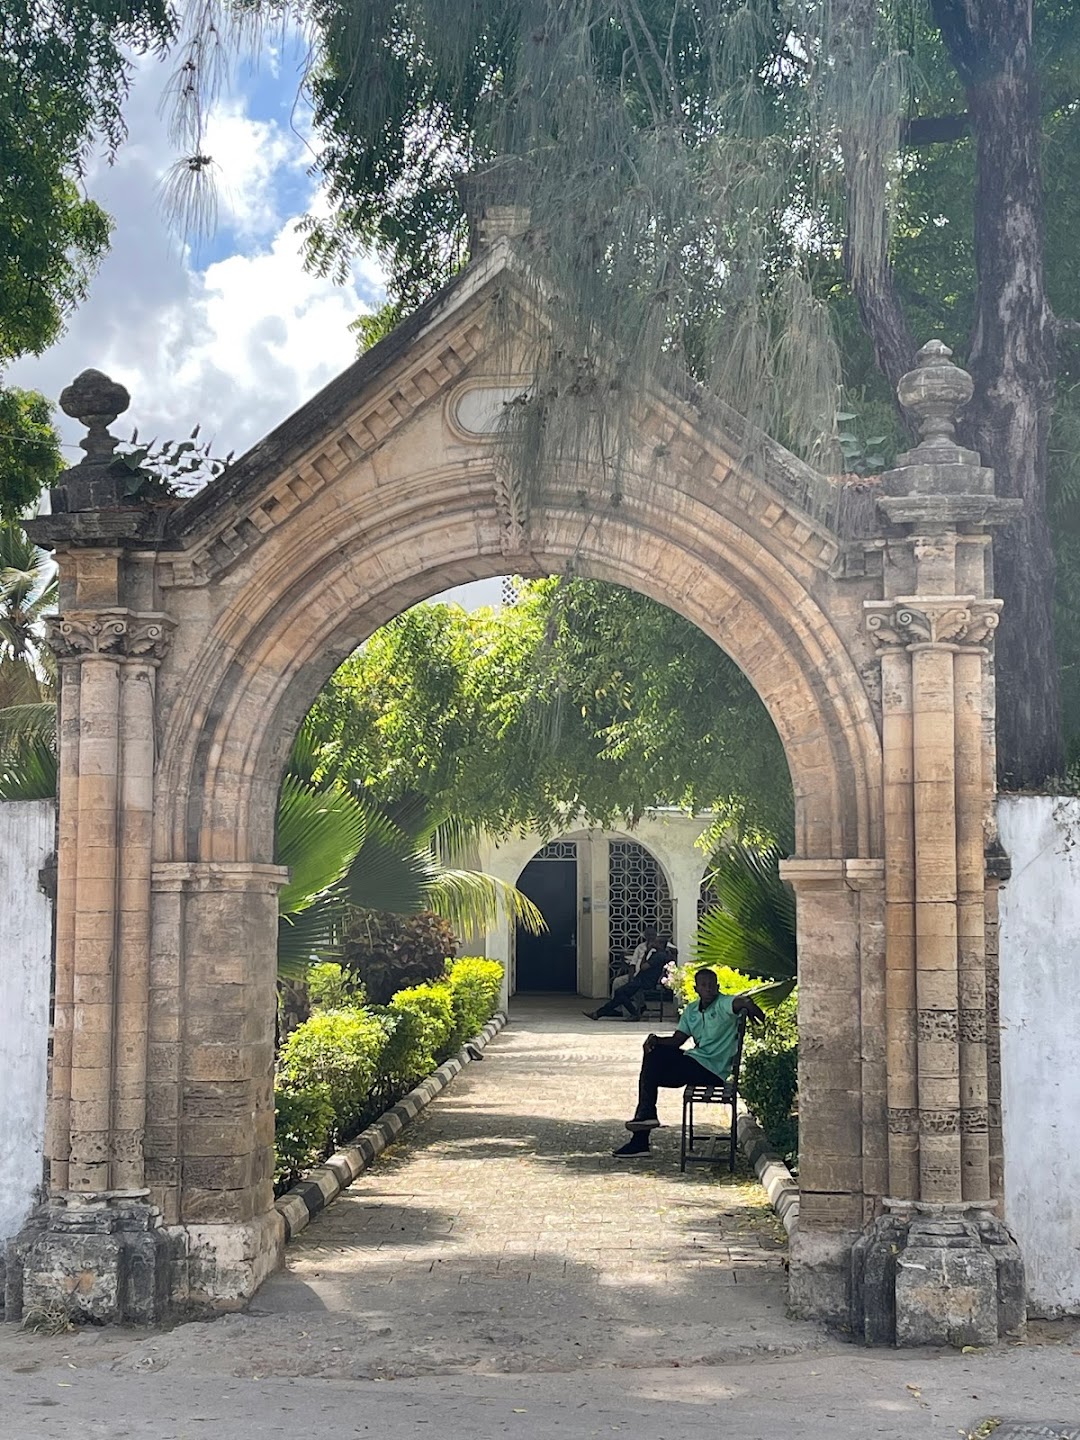 Old Portuguese Arch